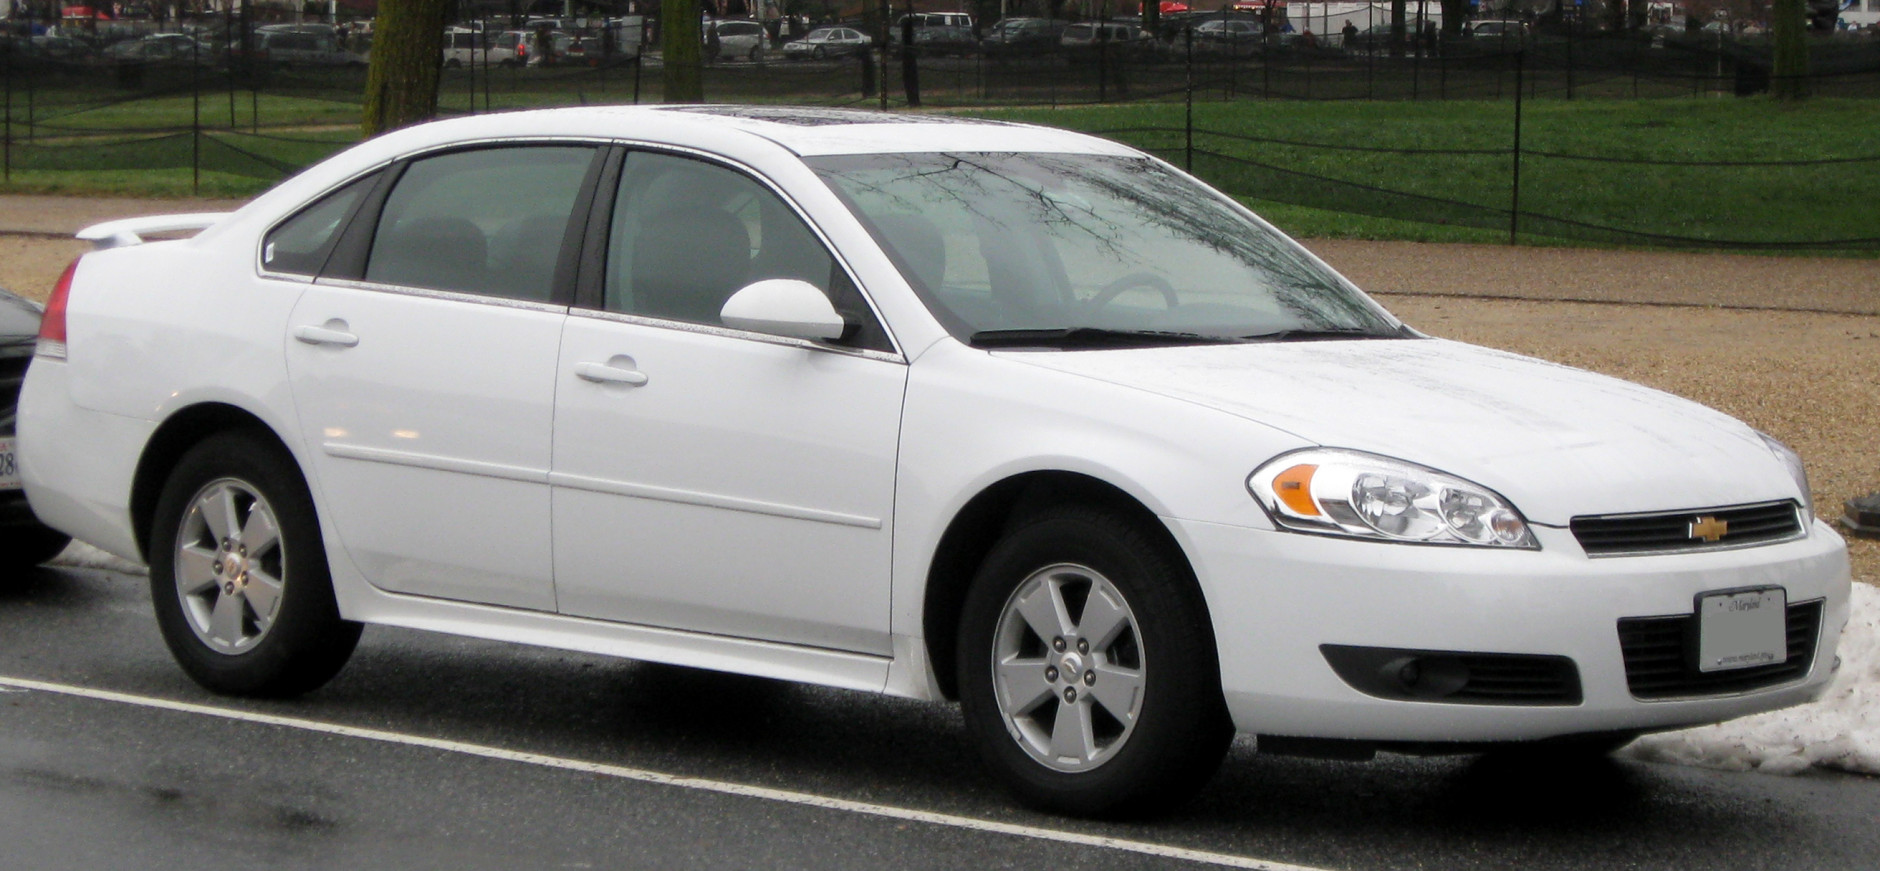 10. 2008 Chevrolet Impala (9,225) (IFCAR via Wikipedia)